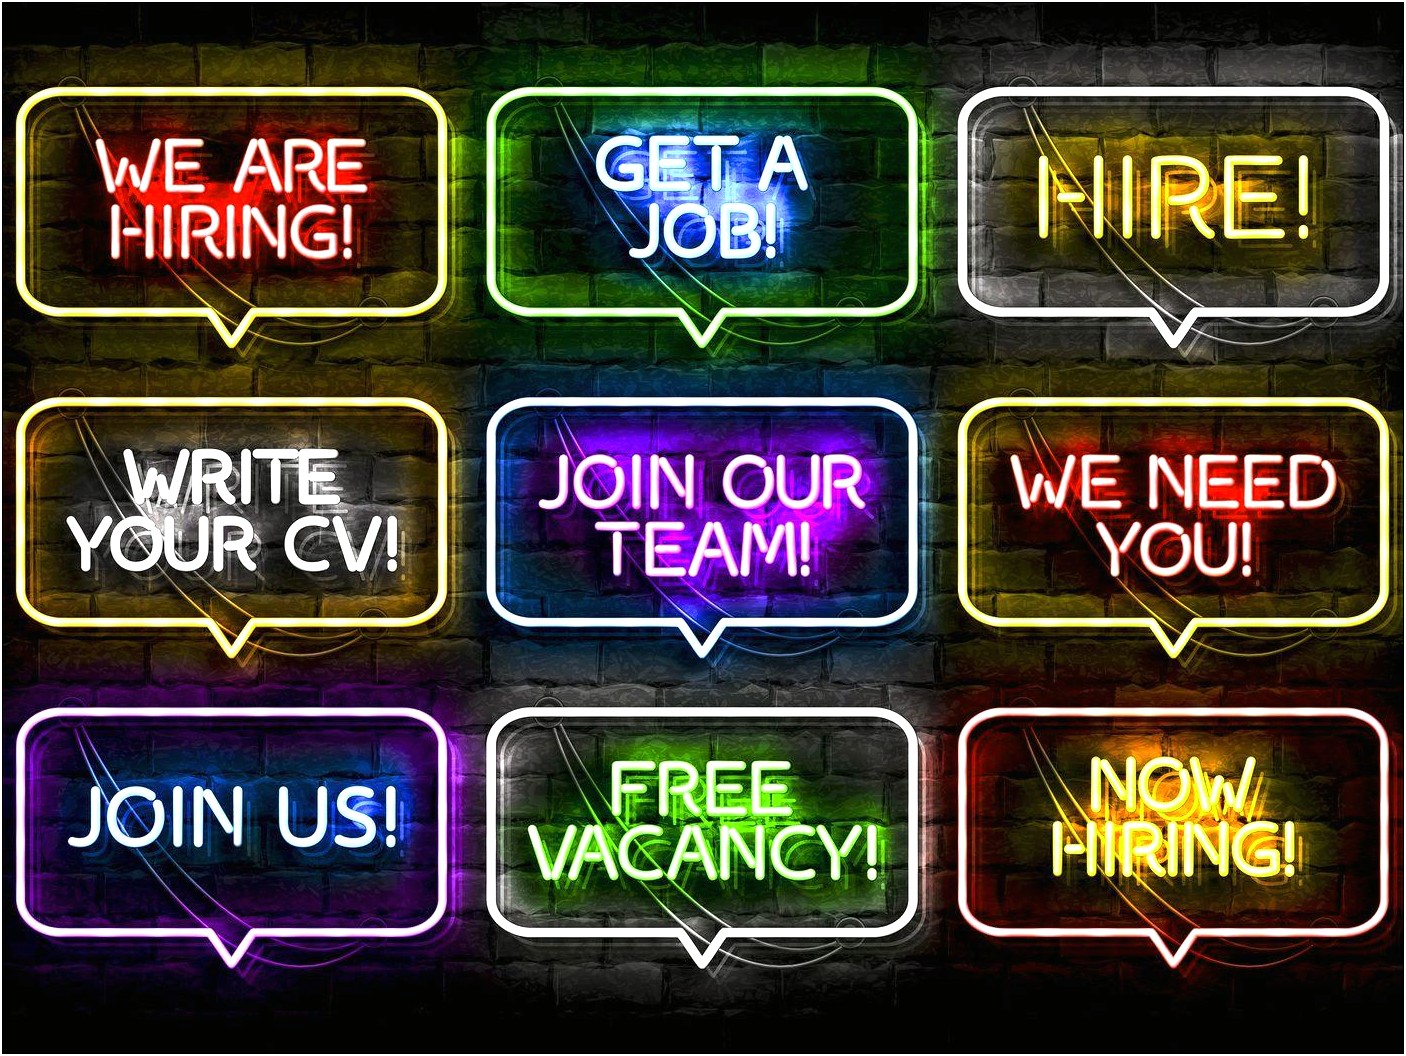 Best Job Posting Service Resume Database For Employers